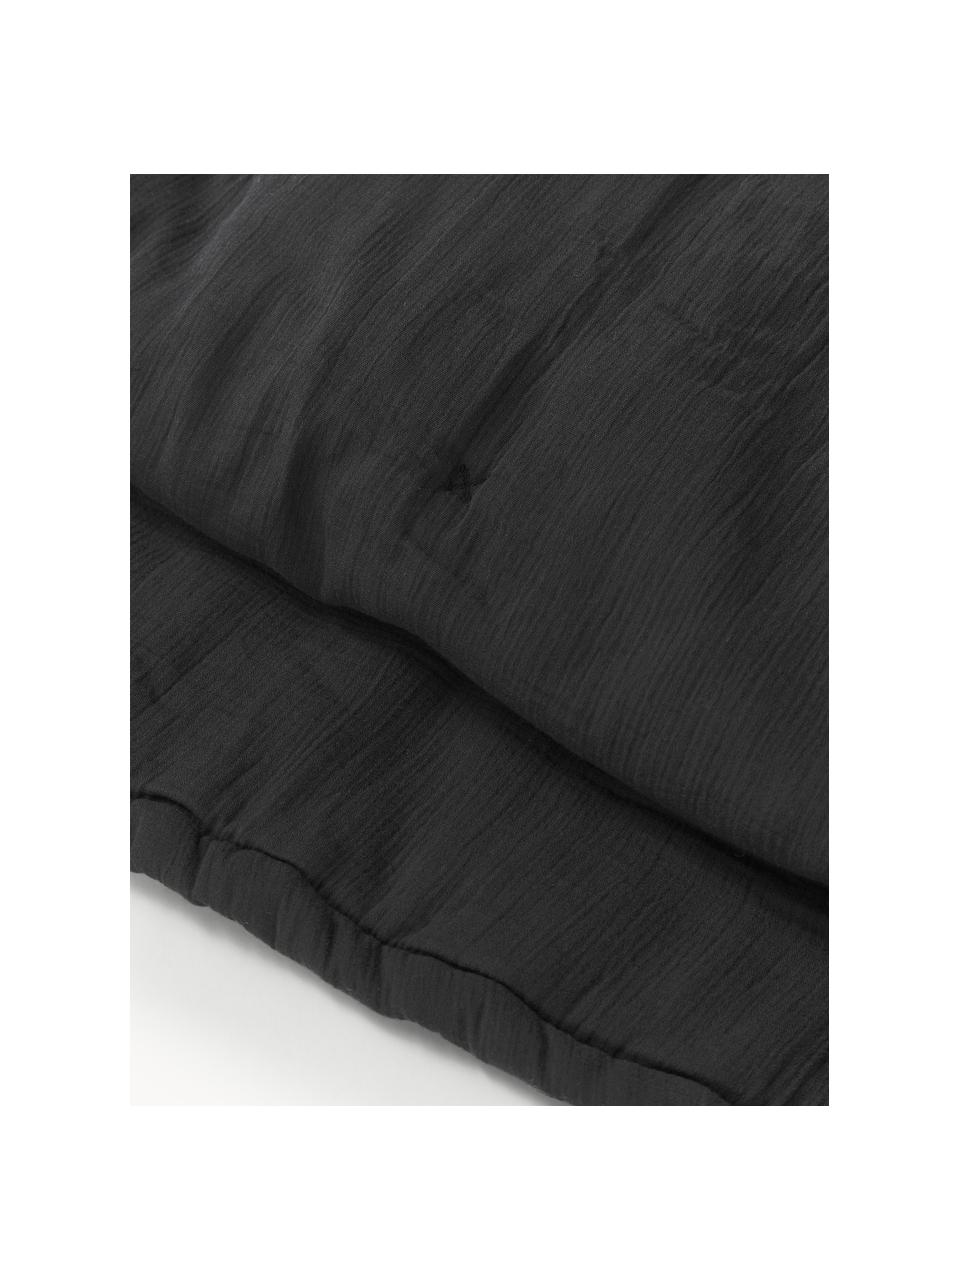 Colcha acolchada de algodón Lenore, Funda: 100% algodón, Negro, An 230 x L 250 cm (para camas de 180 x 200 cm)